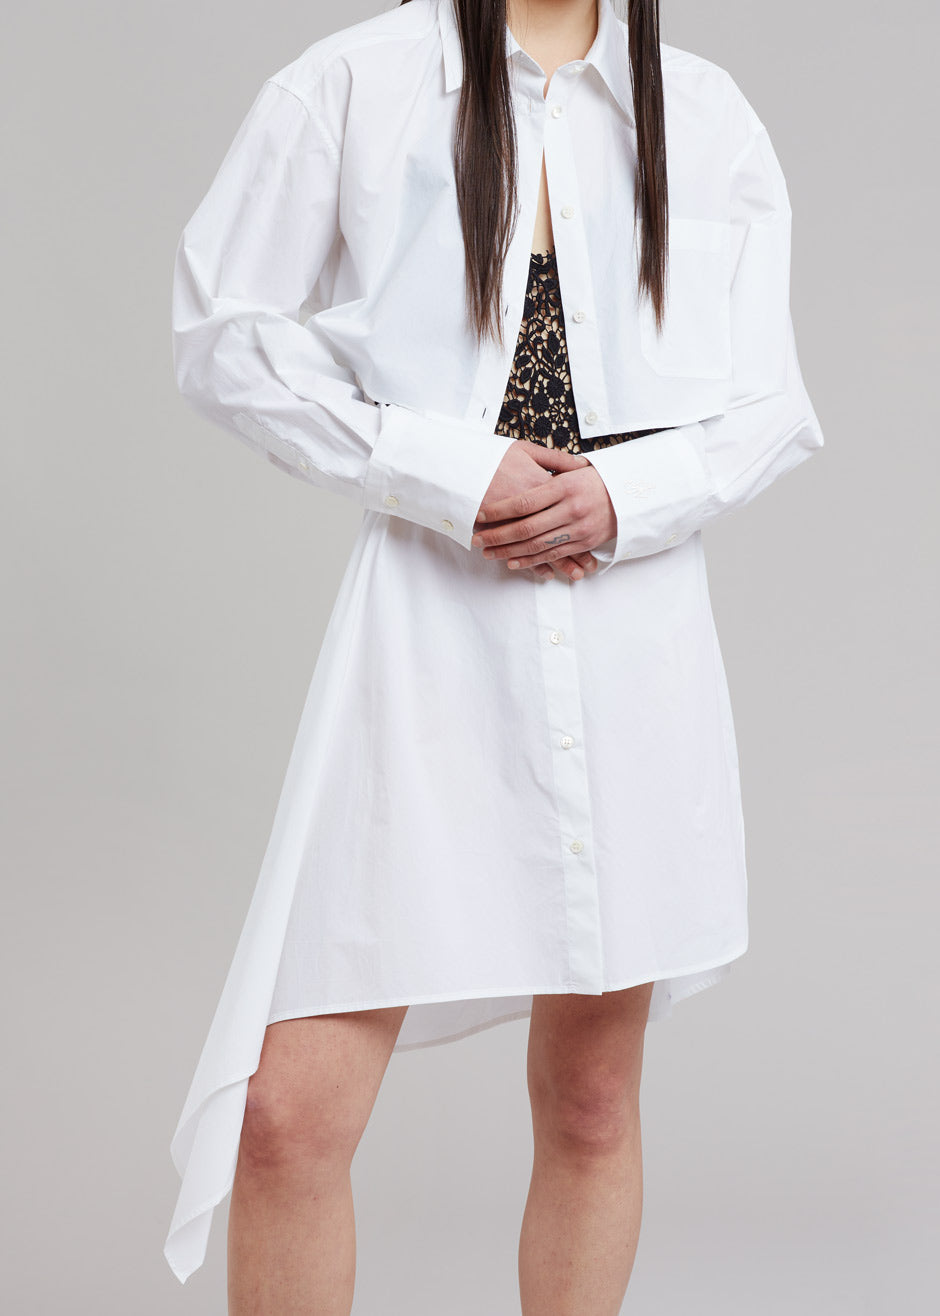 JW Anderson Lace Insert Shirt Dress - White/Black - 6